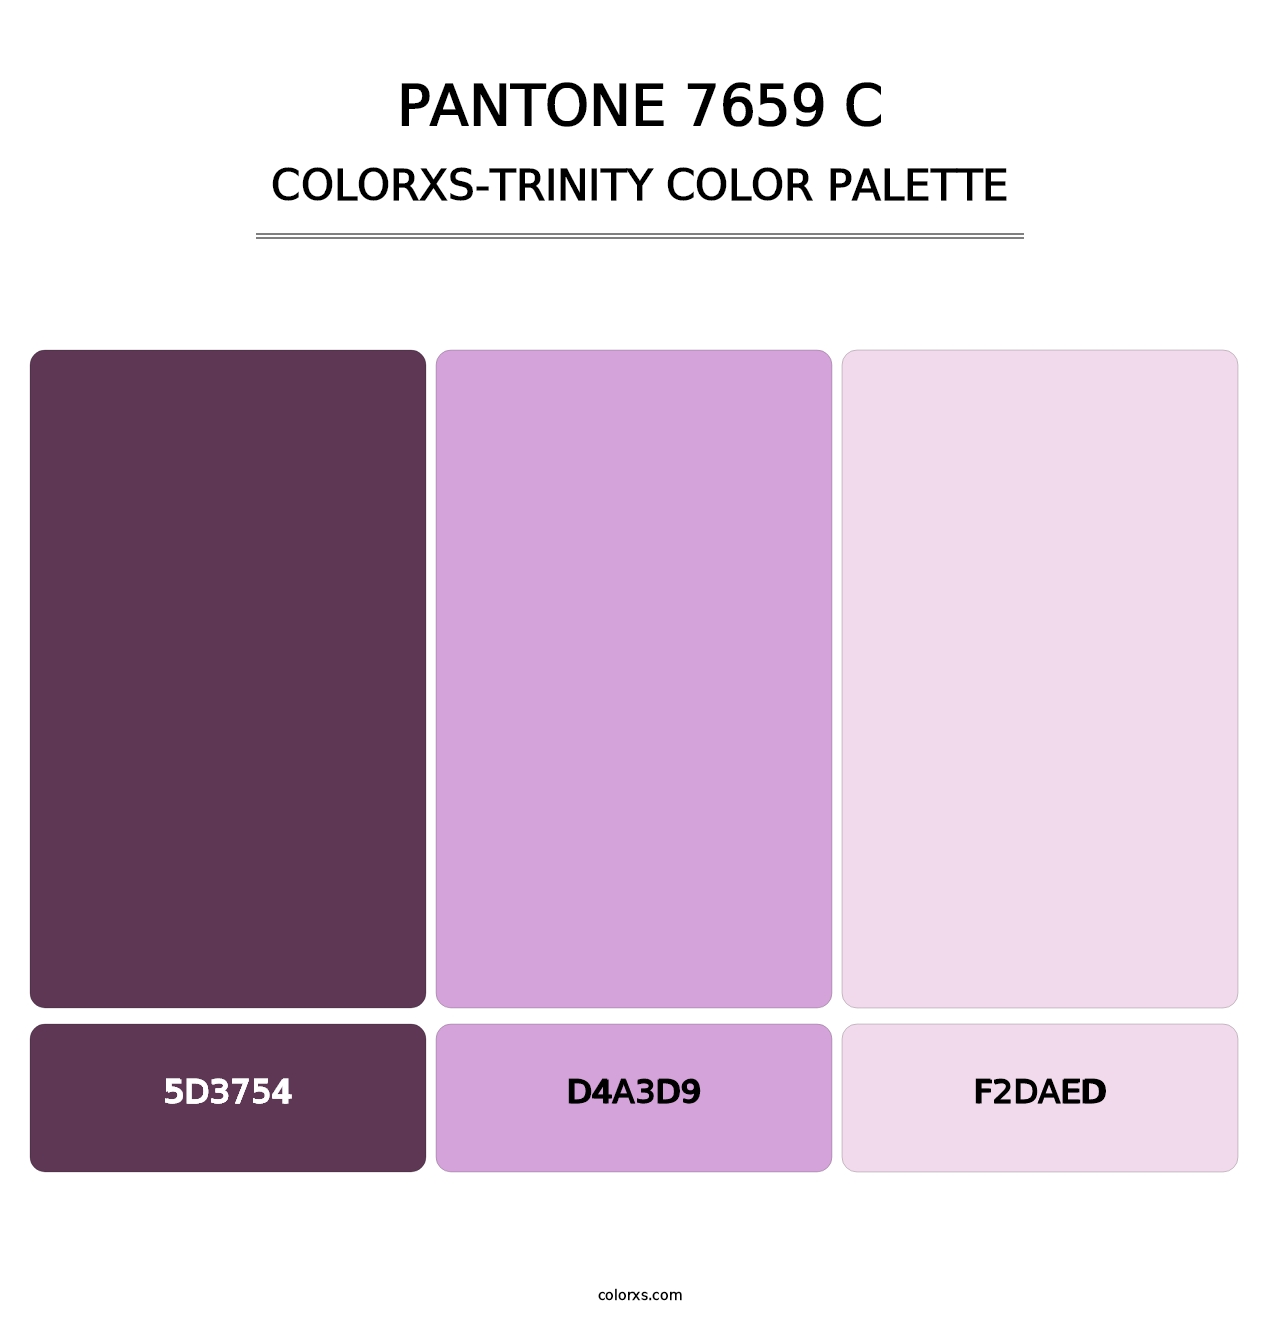 PANTONE 7659 C - Colorxs Trinity Palette